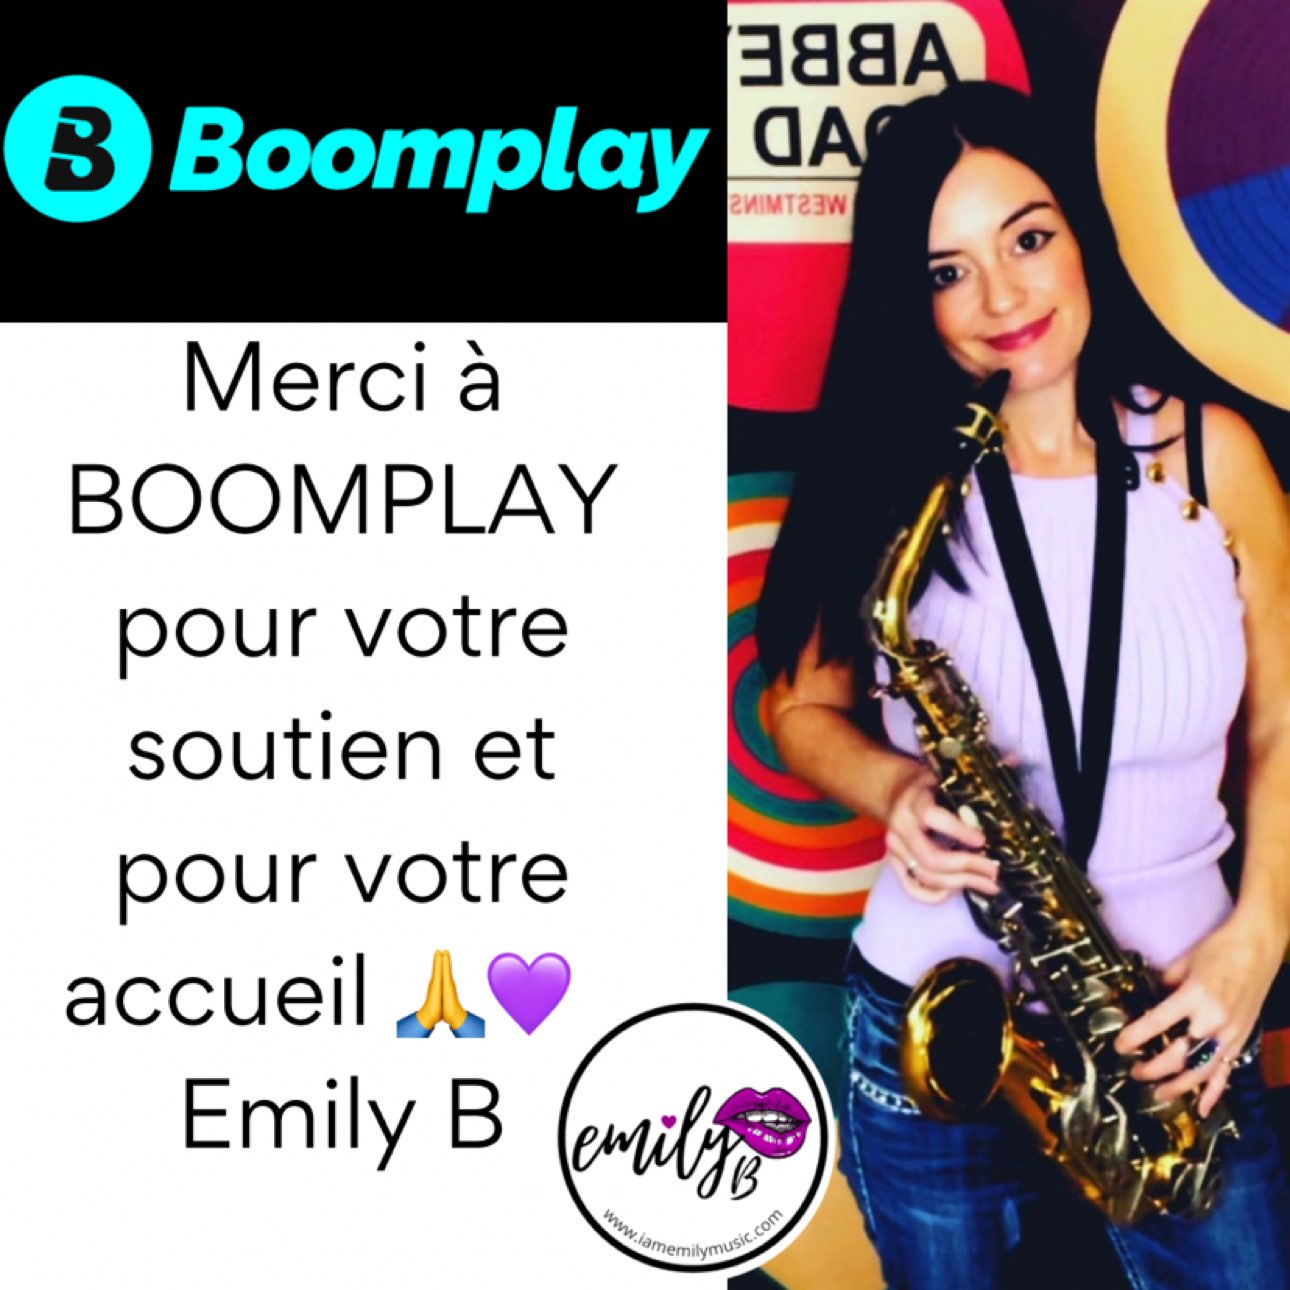 Image | Boomplay Music